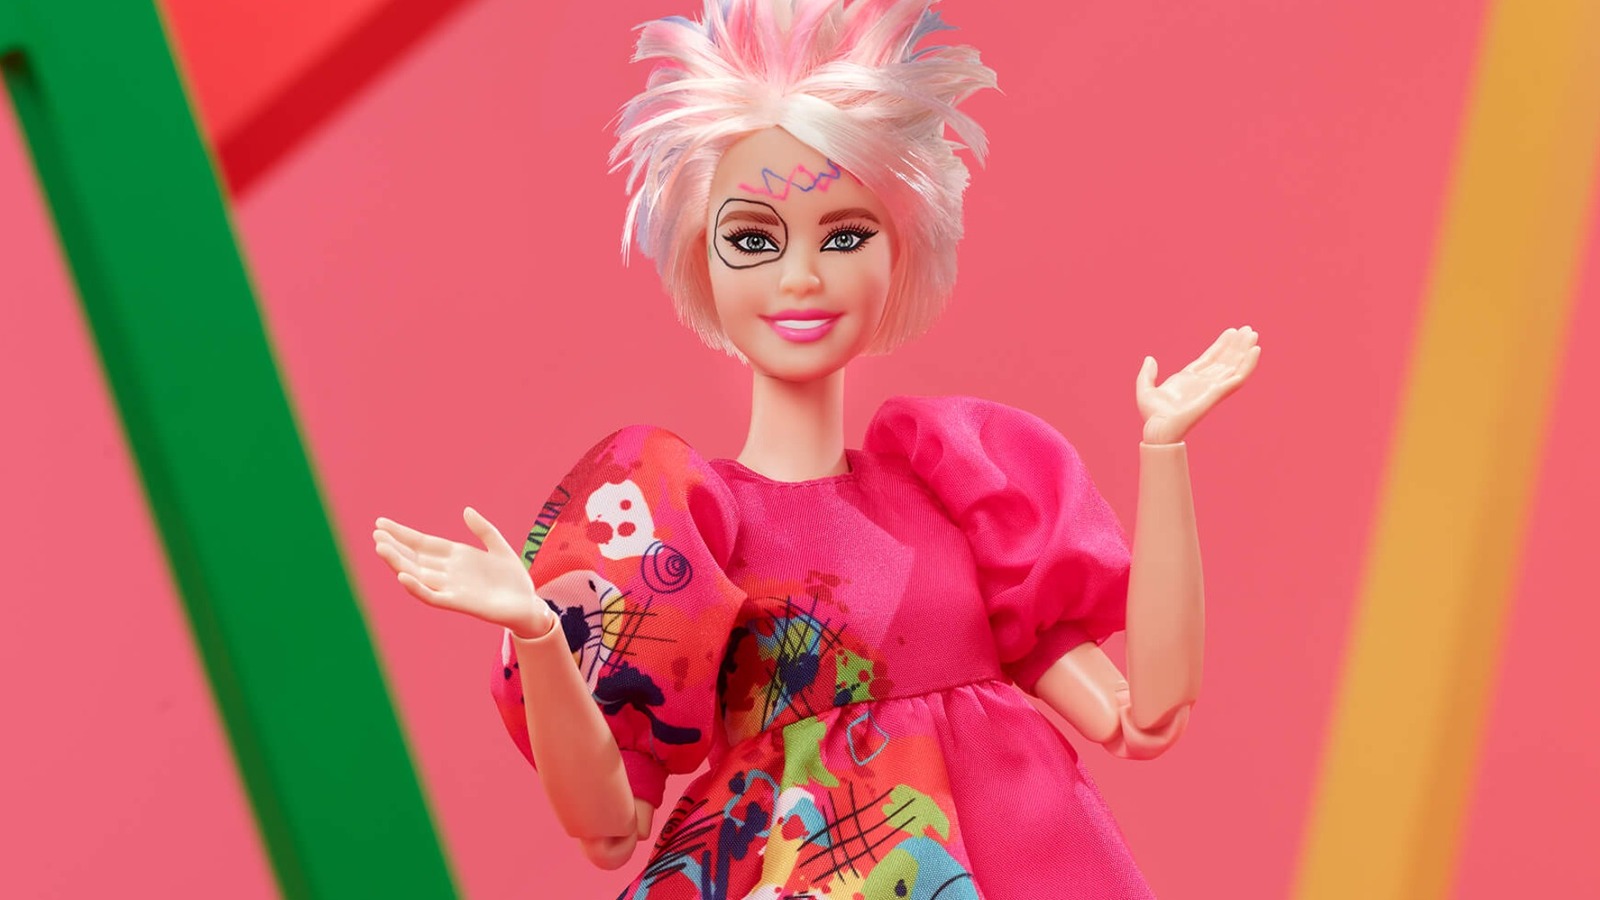 Barbie Mattel Releases New Kate McKinnon 'Weird' Barbie Doll